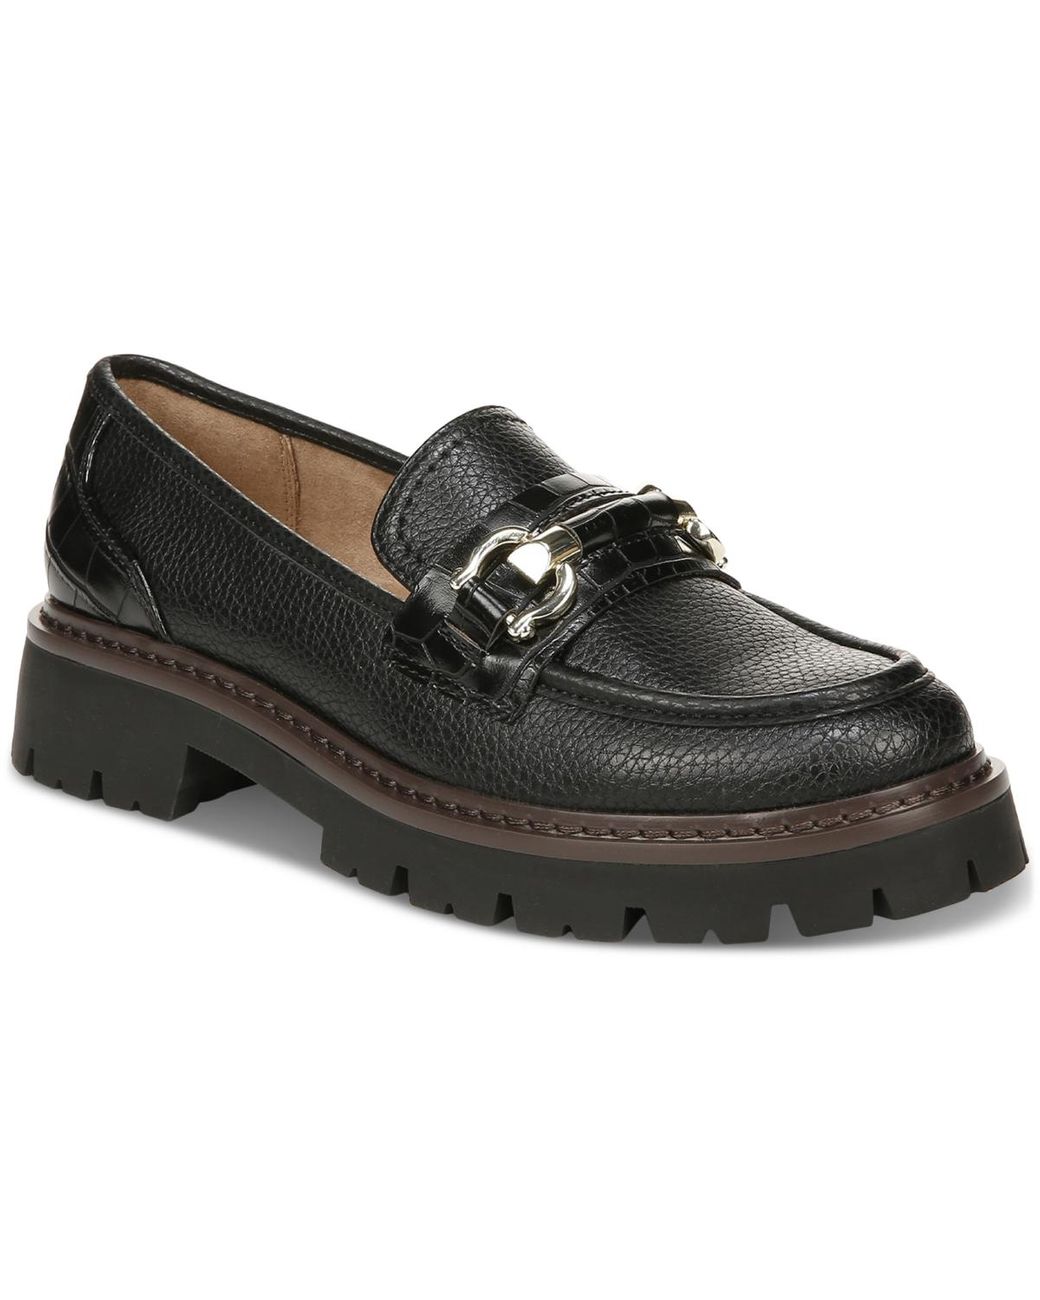 Giani Bernini Shoes Black US Size: 7 W: : Fashion